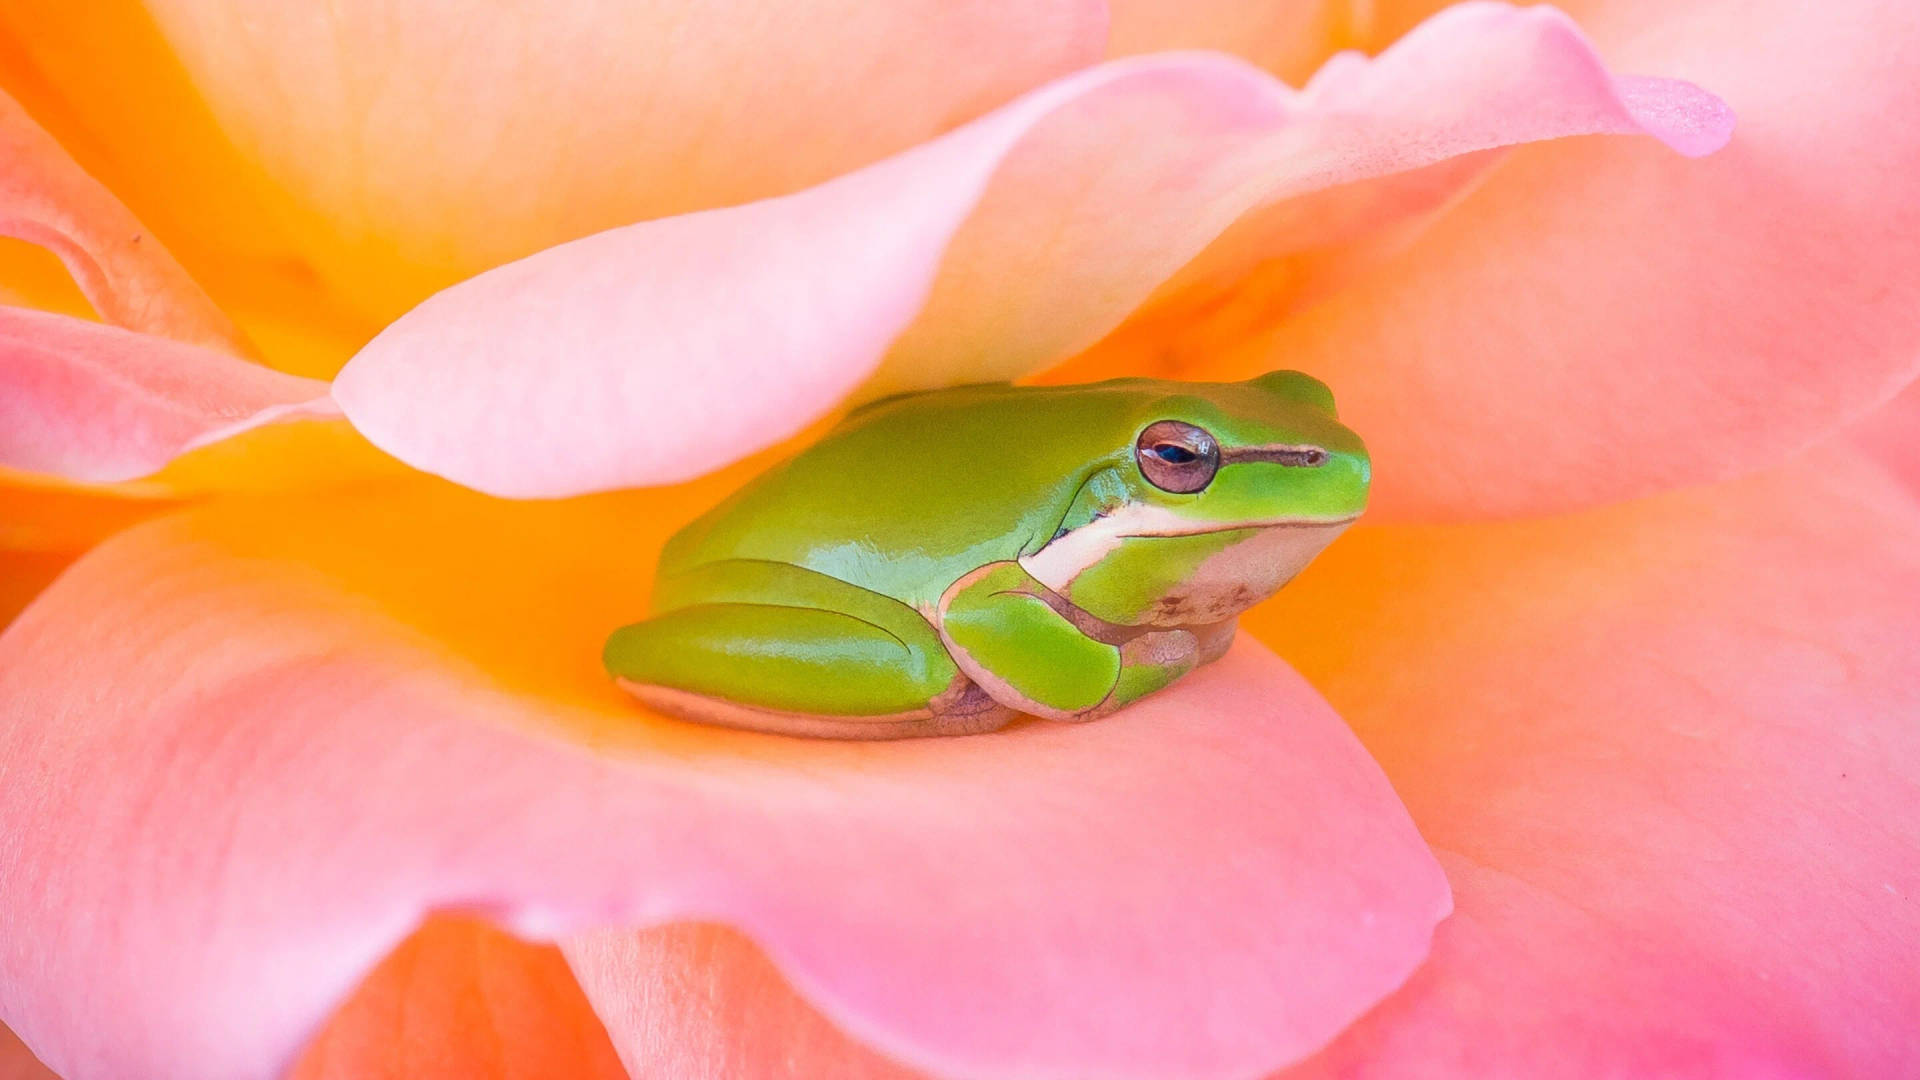 Kawaii Frog In A Pink Flower Wallpaper